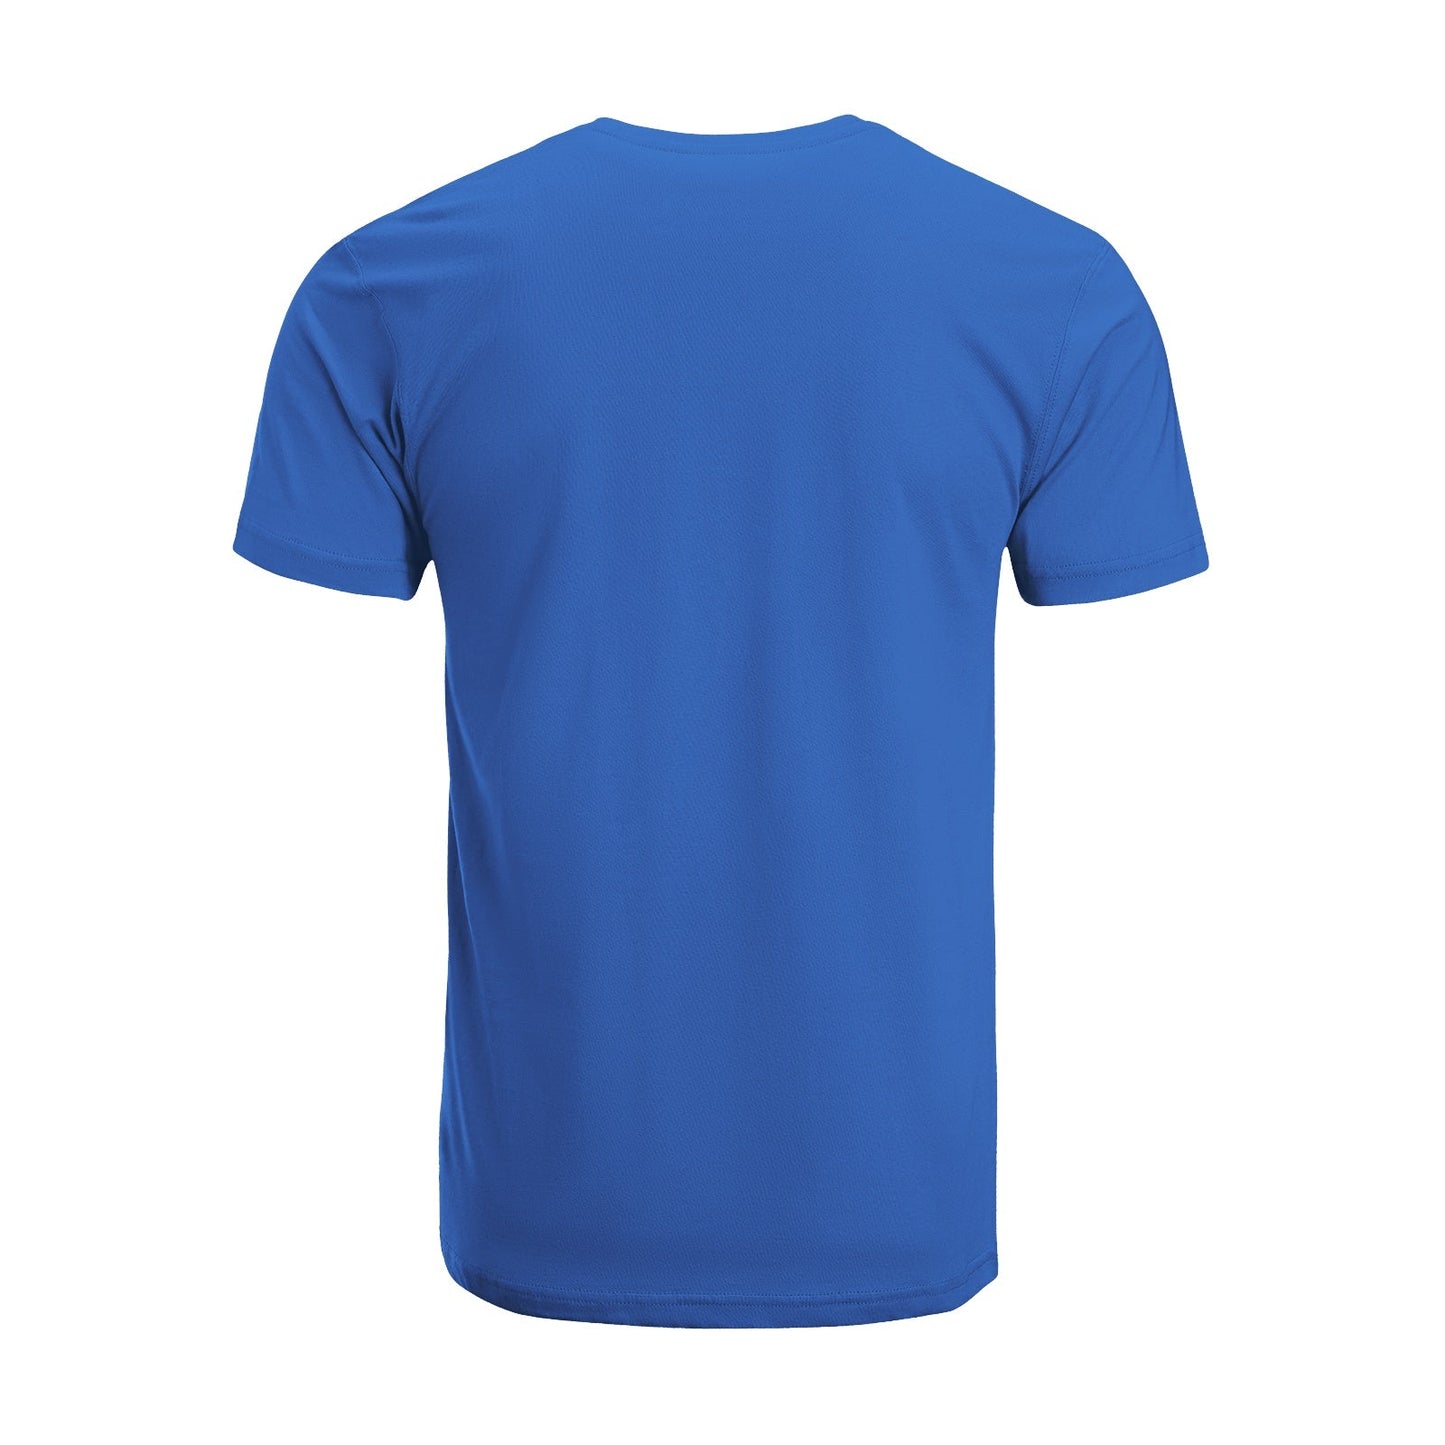 Unisex Short Sleeve Crew Neck Cotton Jersey T-Shirt VEGAN 10